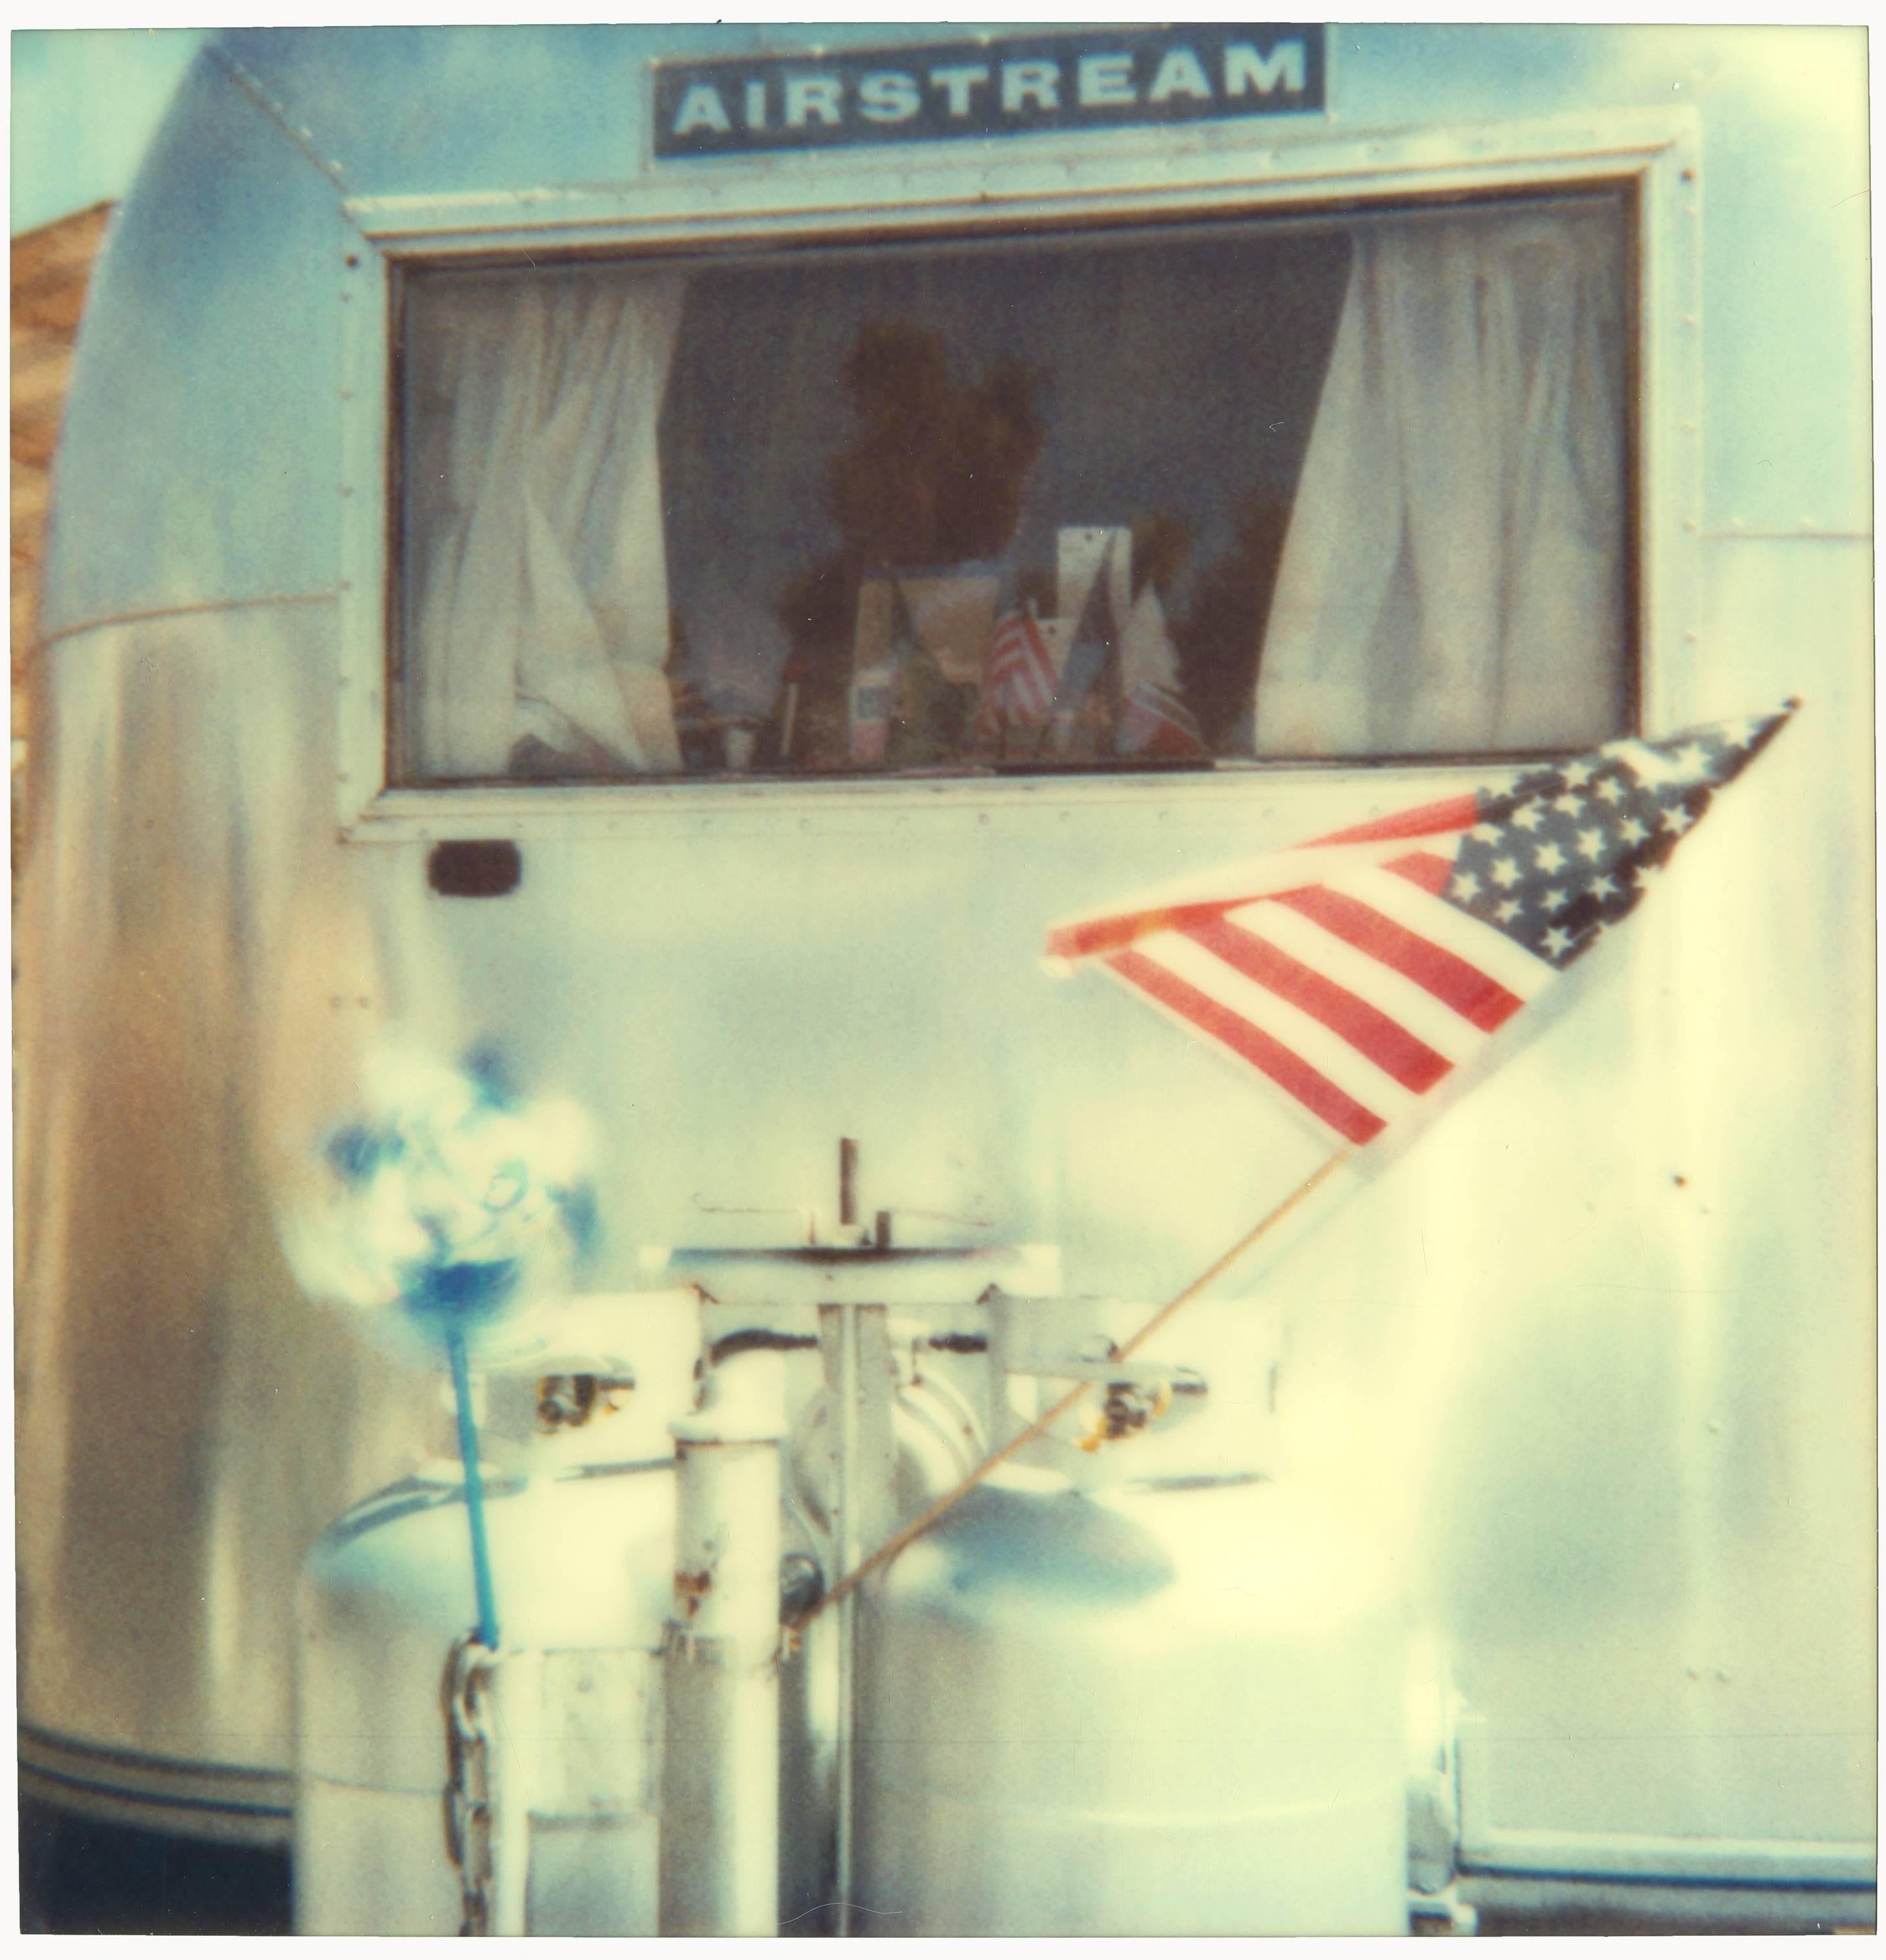 Airstream (29 Palms, CA)